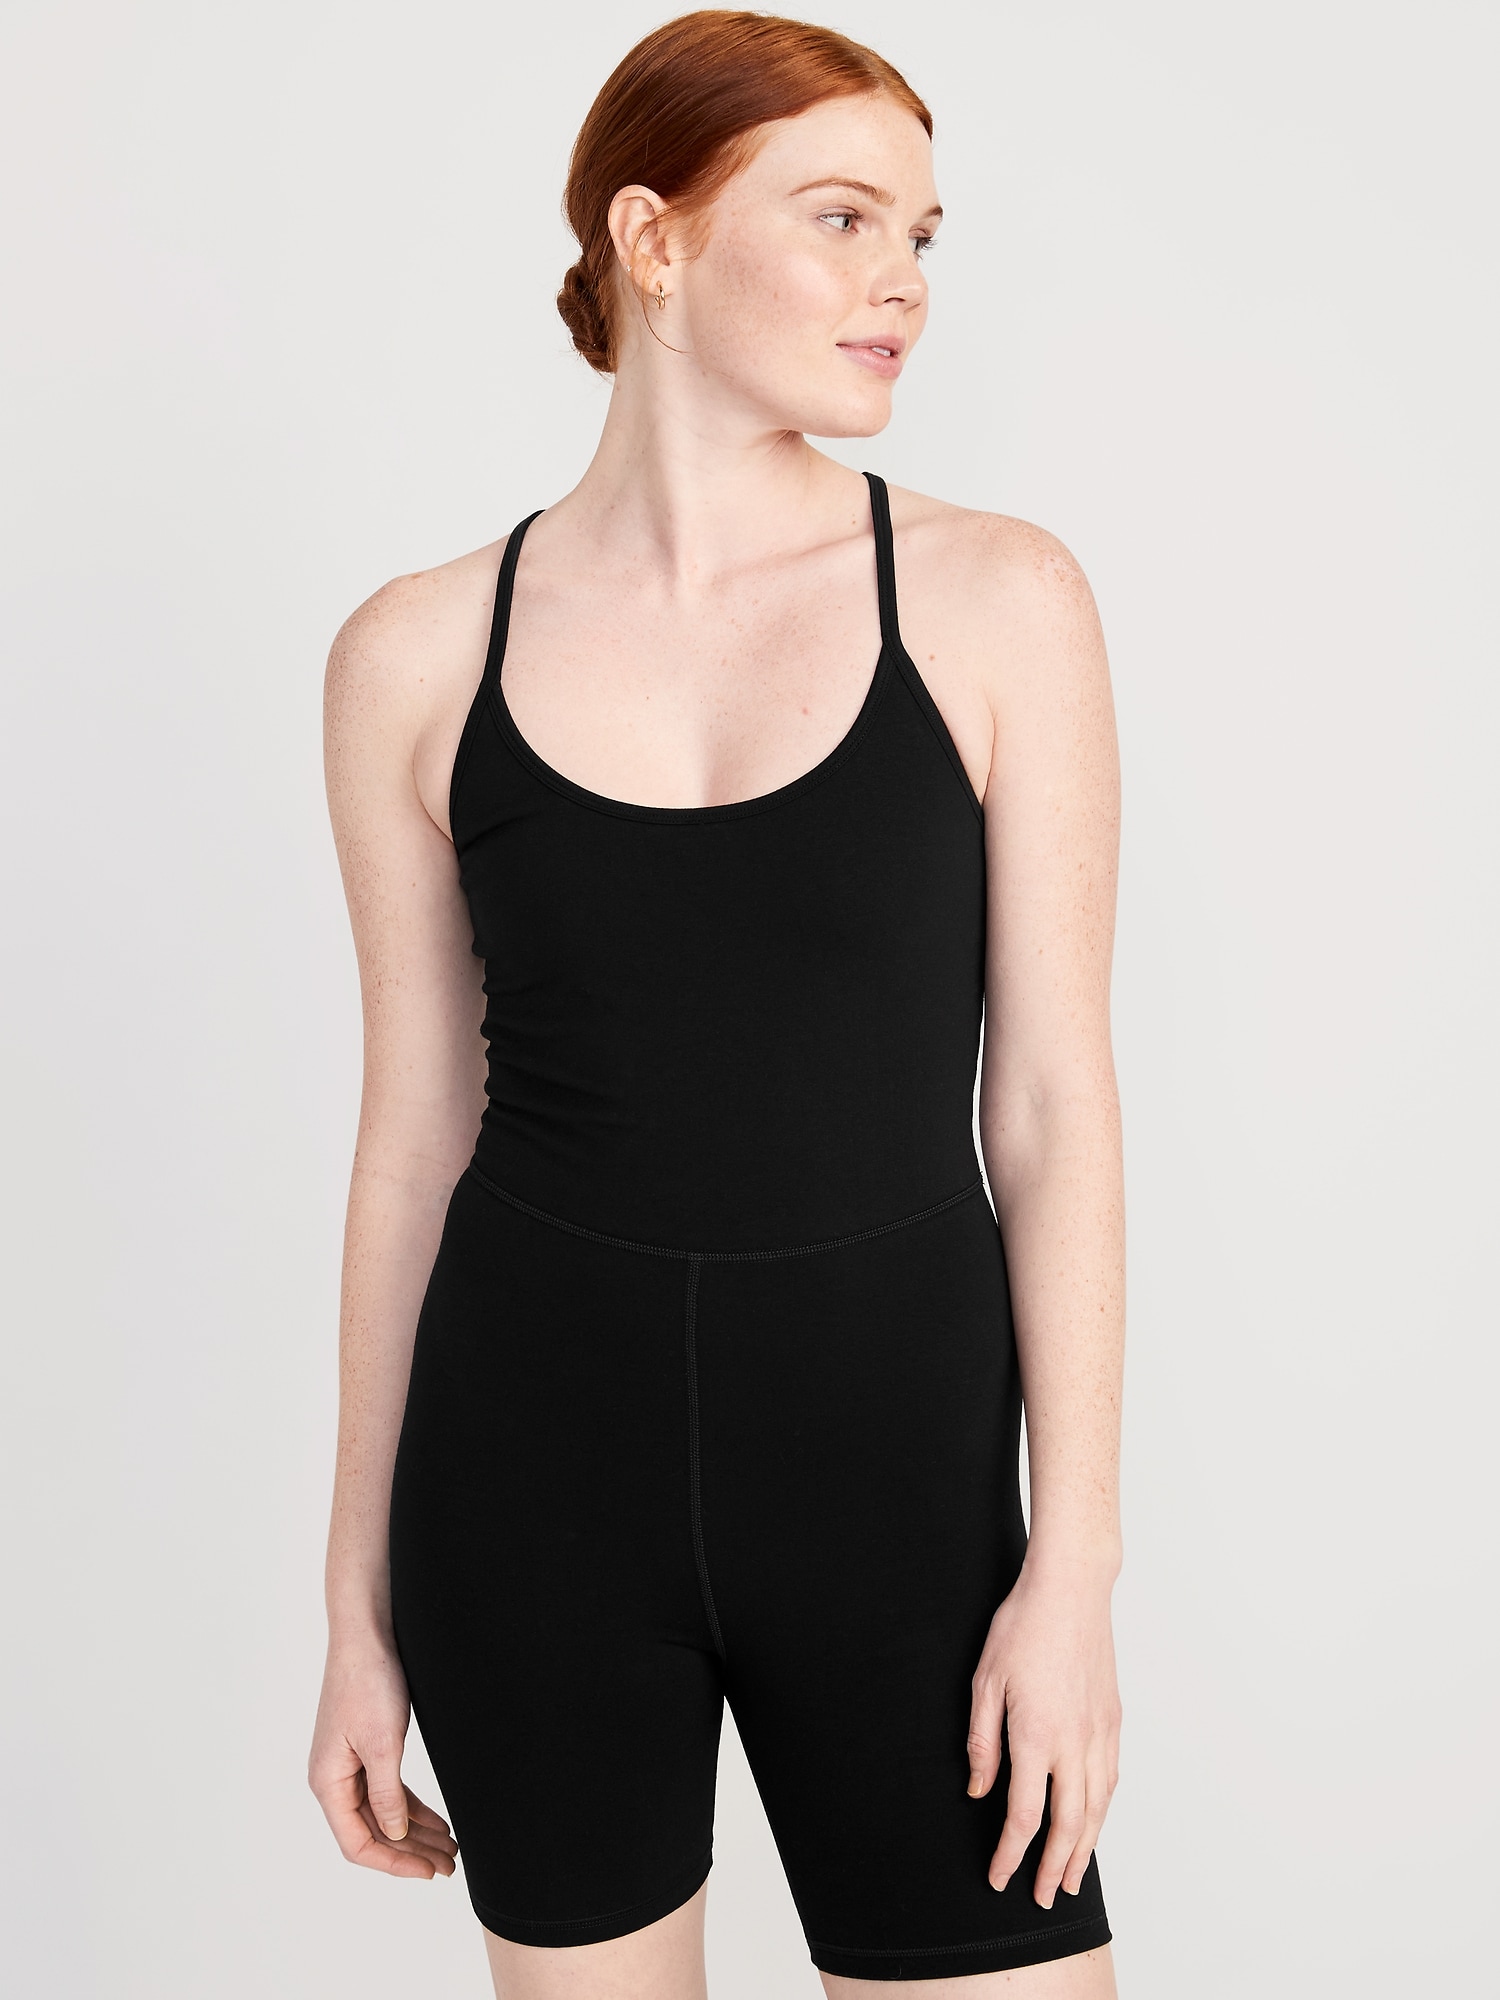 Old Navy PowerLite Lycra® ADAPTIV Short Bodysuit for Women -- 6-inch inseam